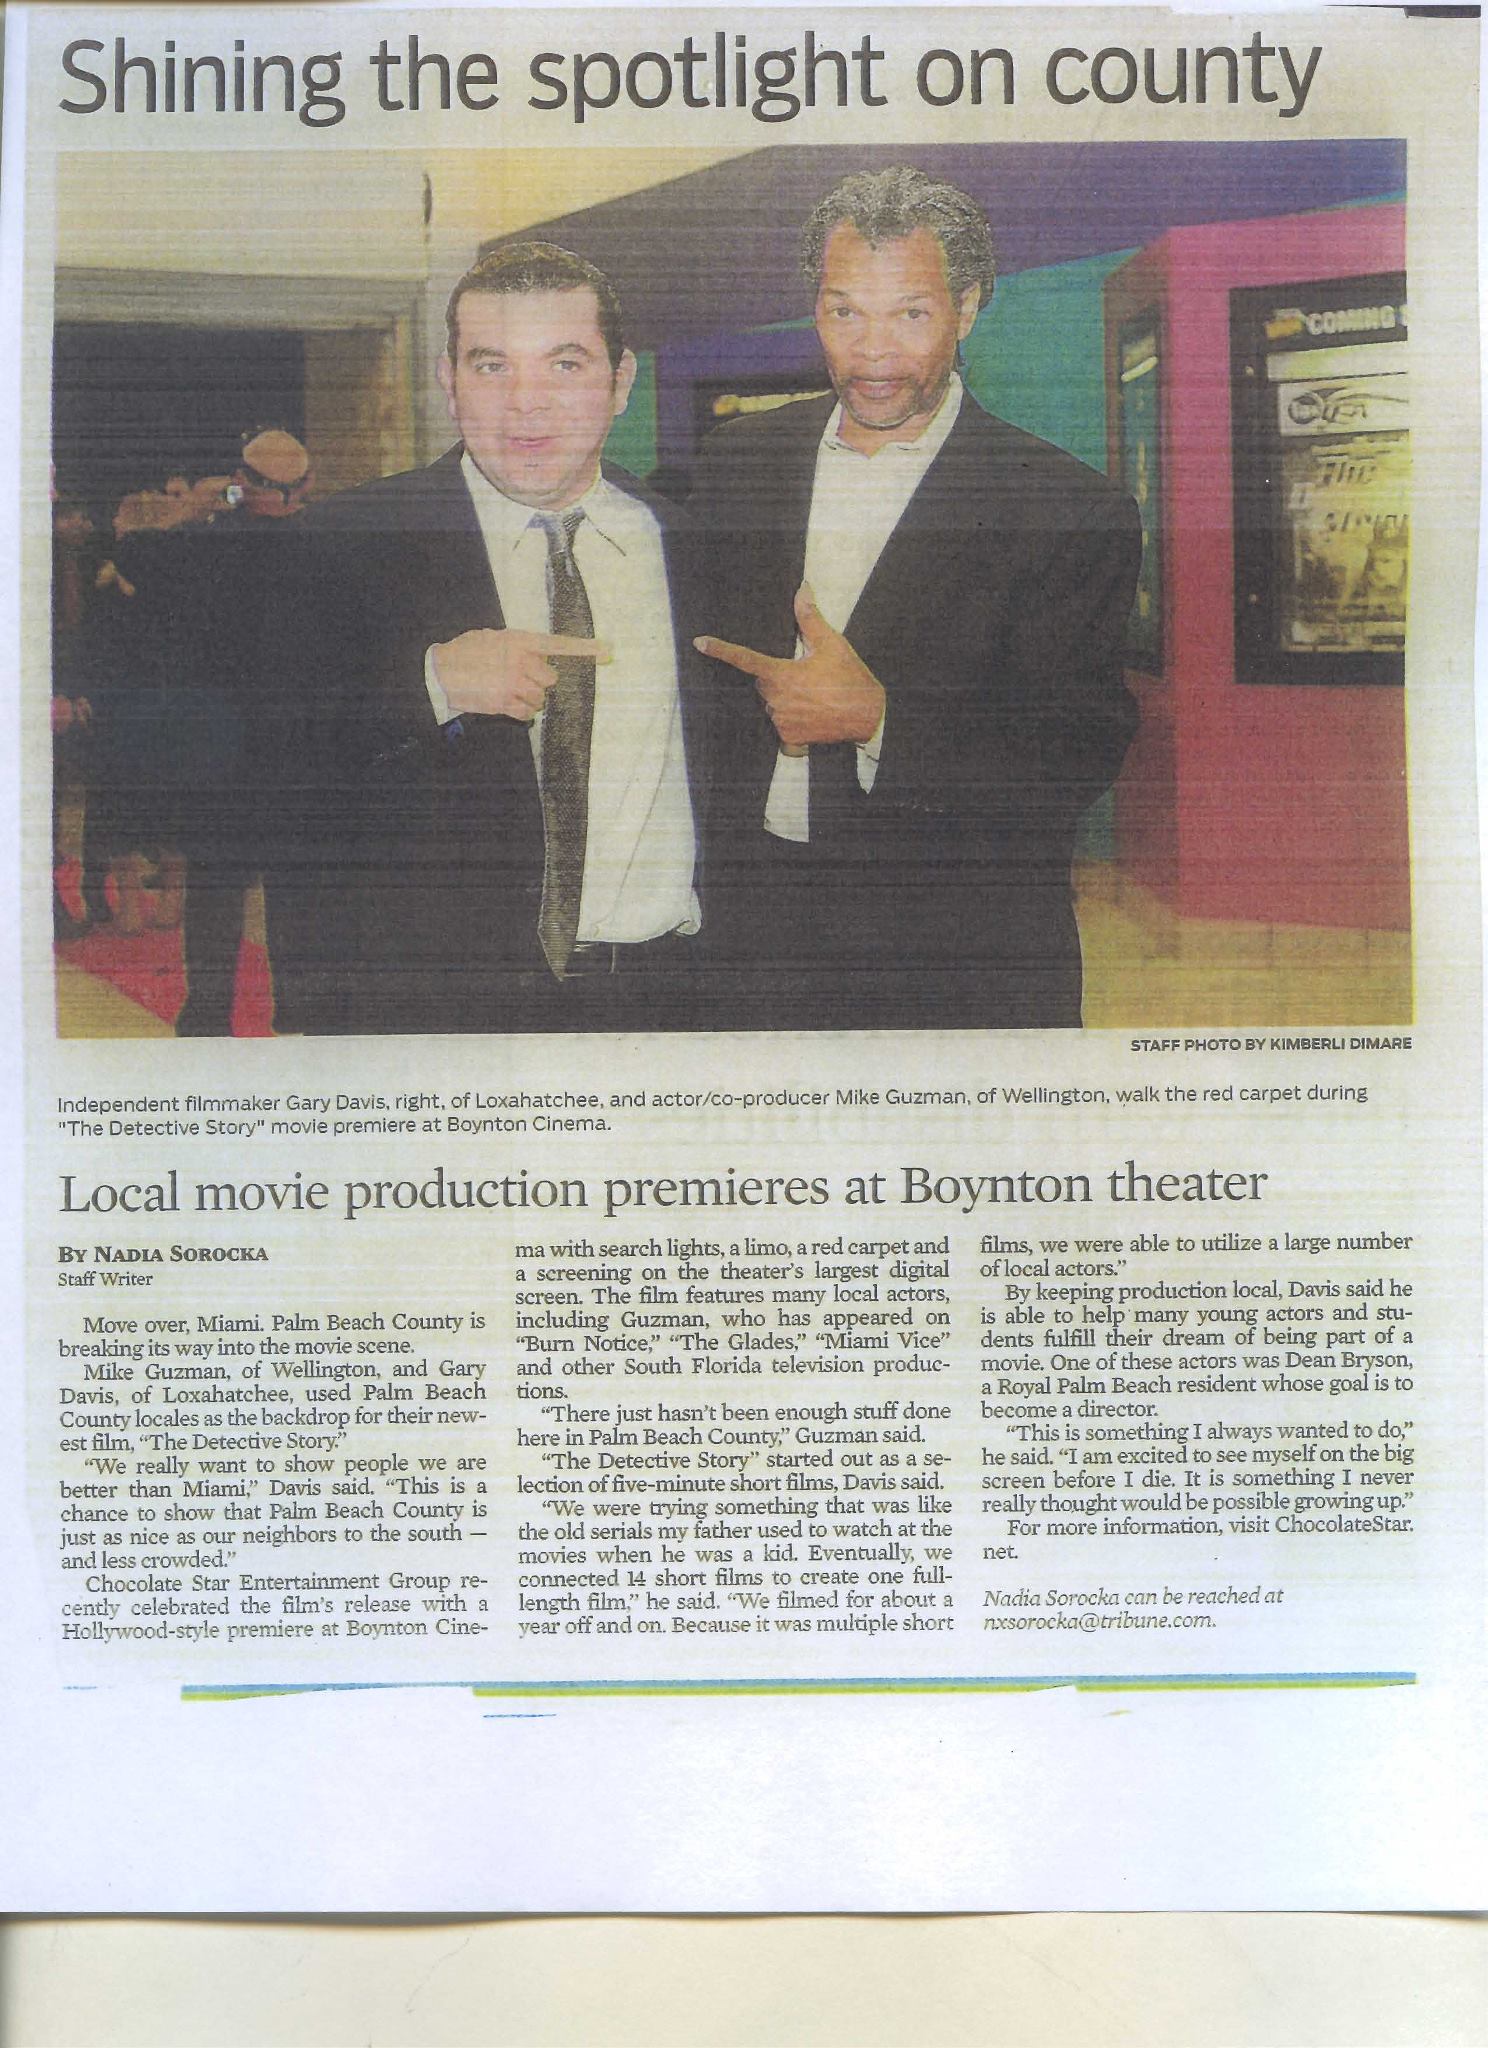 Mike Guzman and Indie Film Director/Producer Gary Davis in Sun Sentinel Newspaper